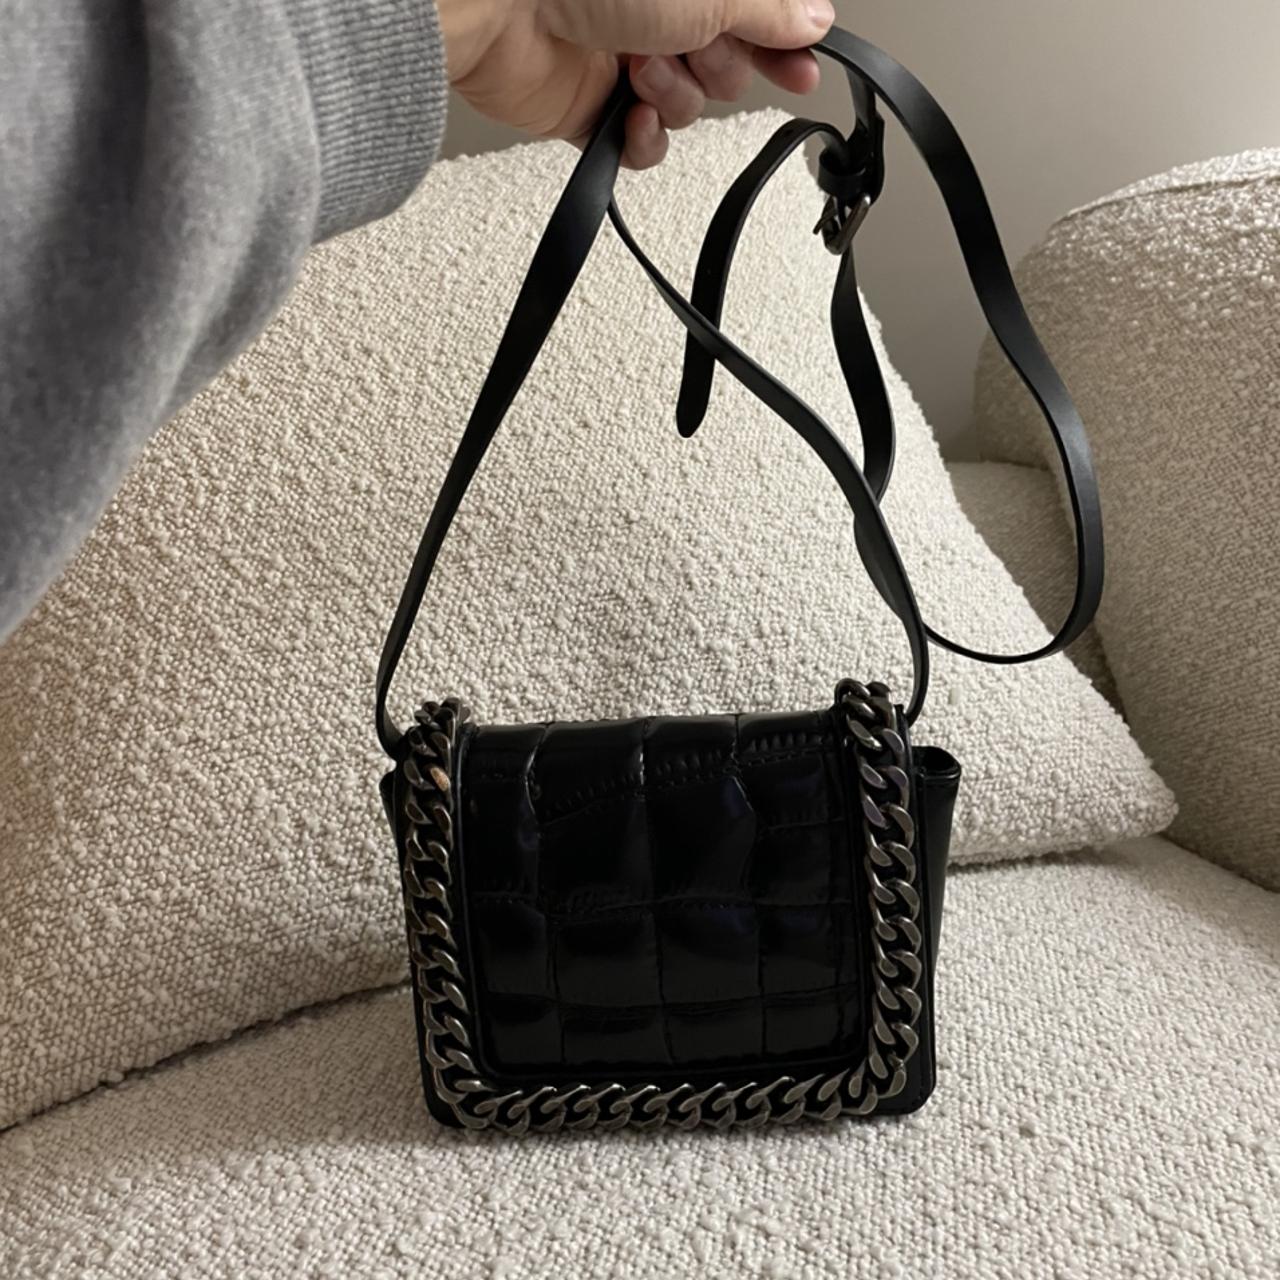 Small Zara cross body faux leather bag (size of a... - Depop